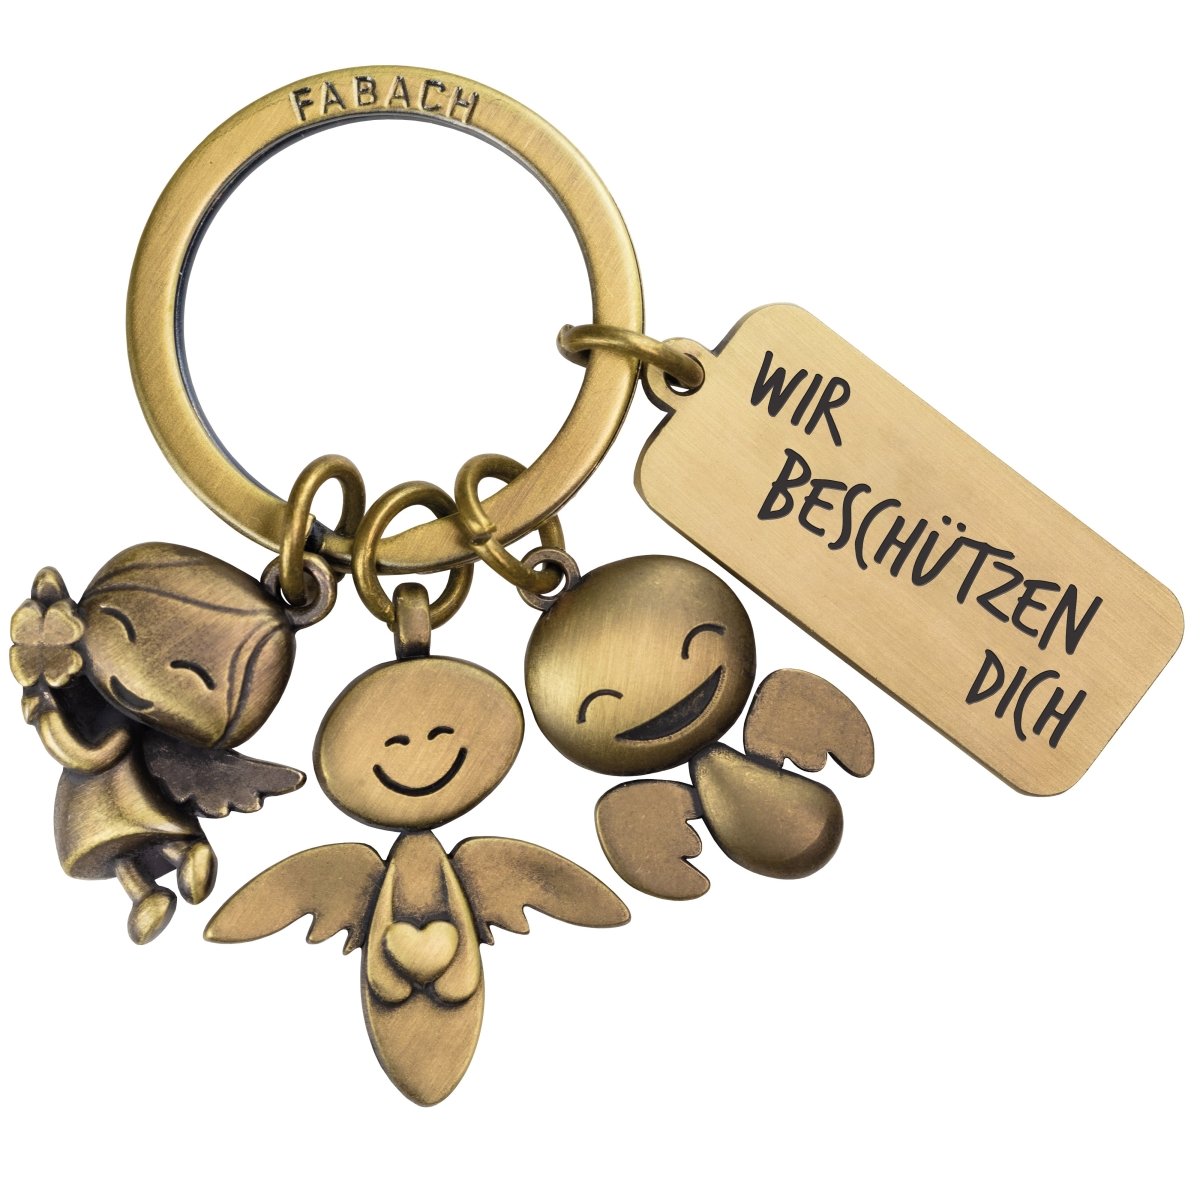 "3 Engel" Schutzengel Schlüsselanhänger - Engel Glücksbringer mit Botschaft Gravur "Wir beschützen Dich" - FABACH#farbe_antique bronze